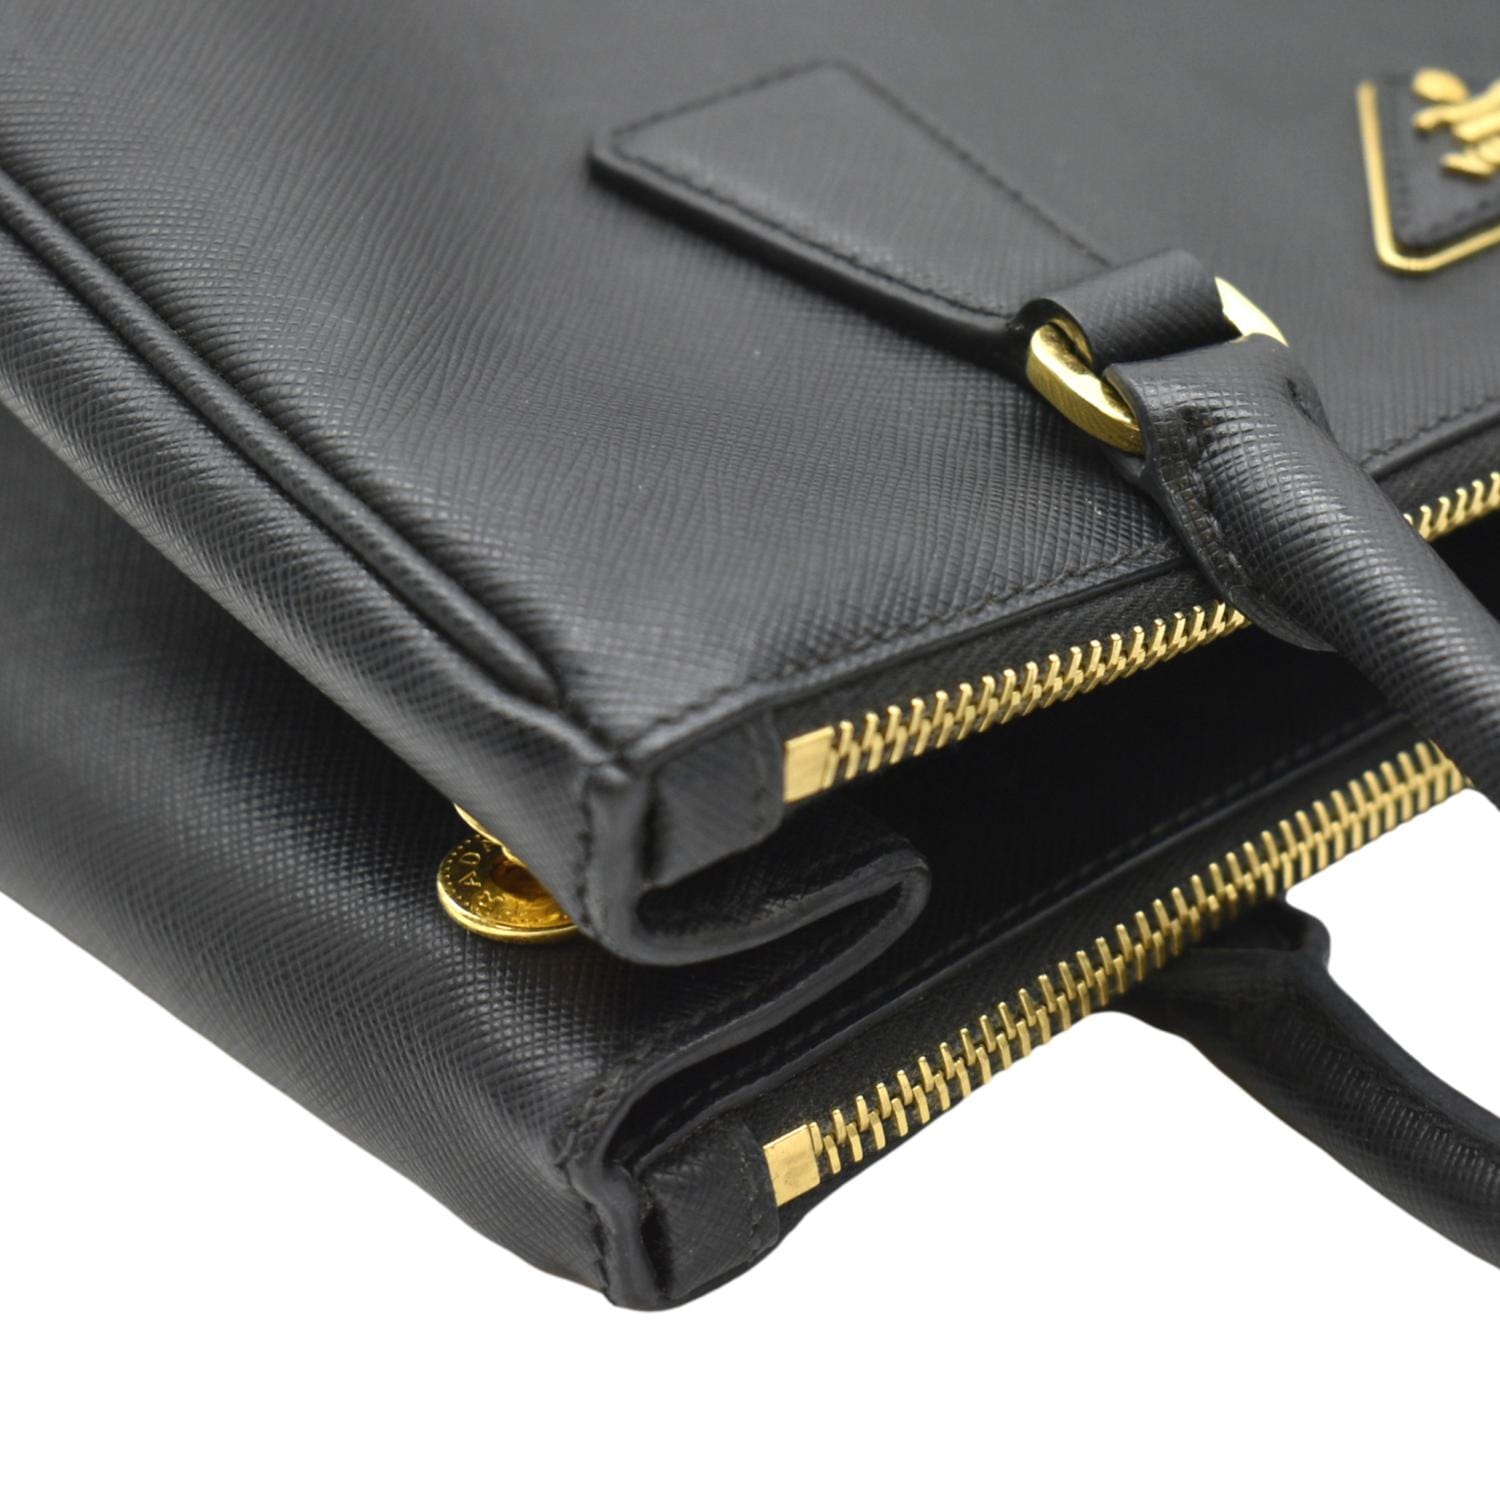 Black Large Prada Galleria Saffiano Leather Bag